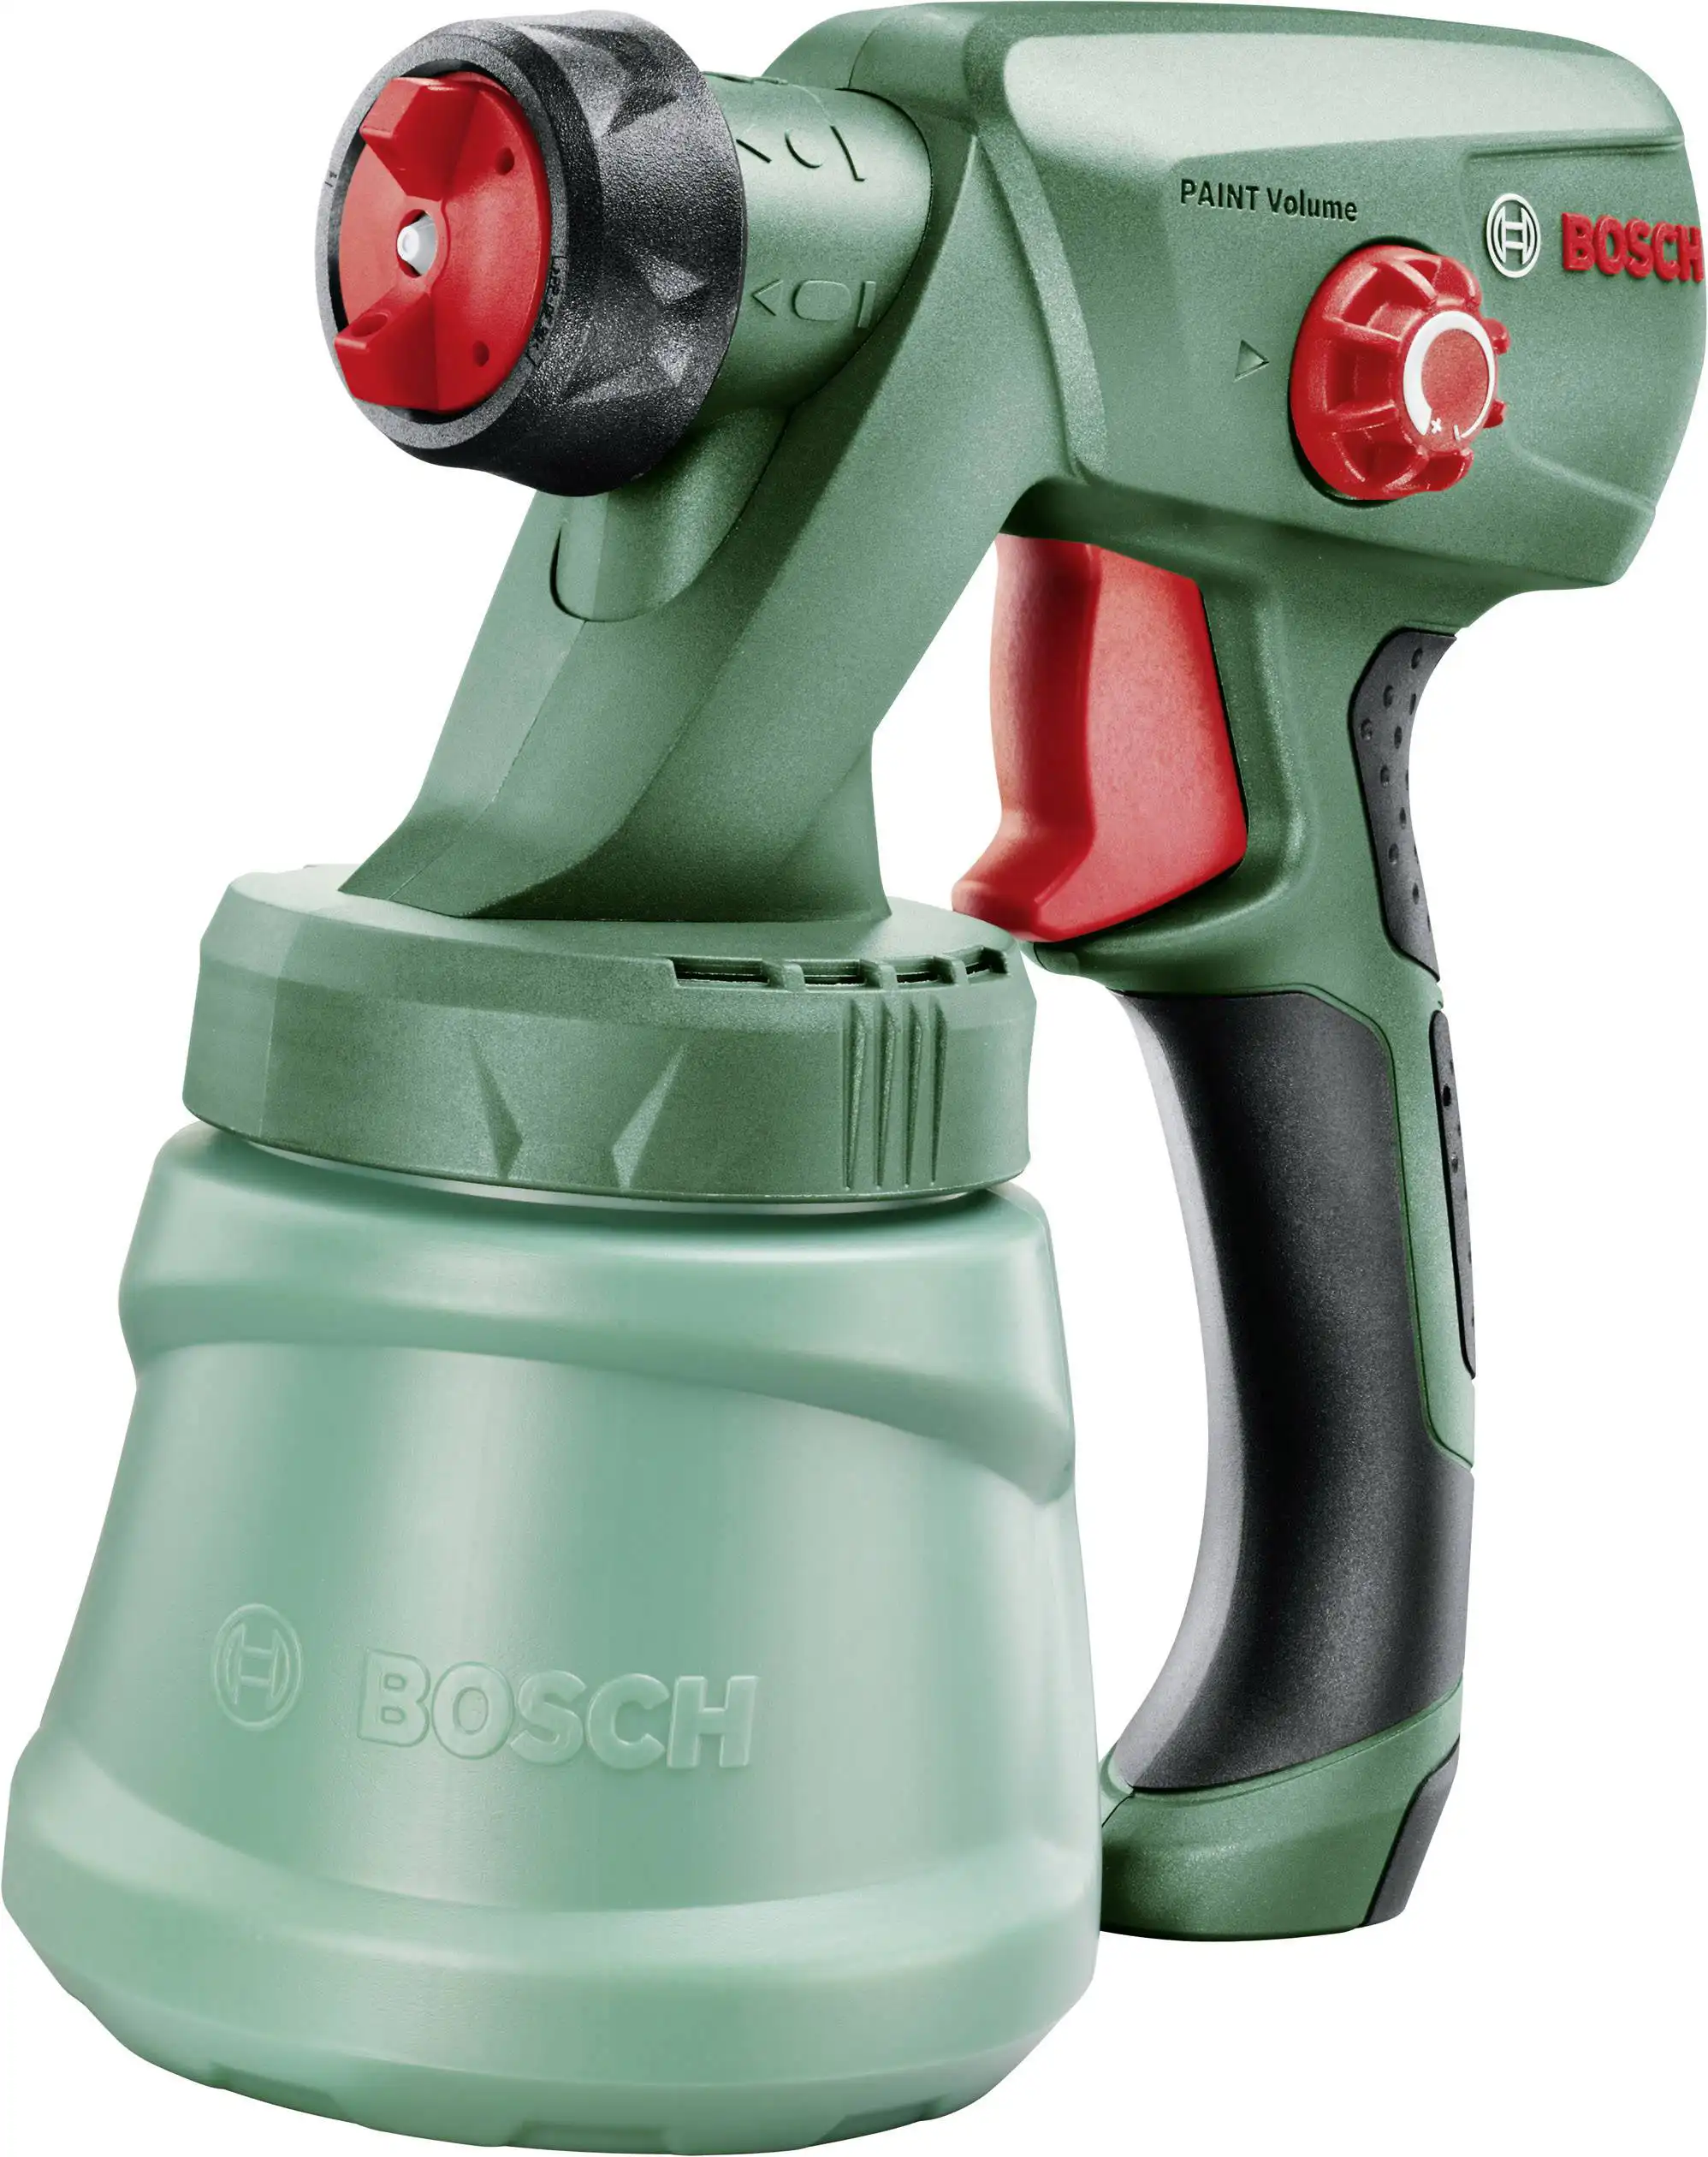 Bosch Paint Spray Gun, 440W, 800ml, PFS 2000